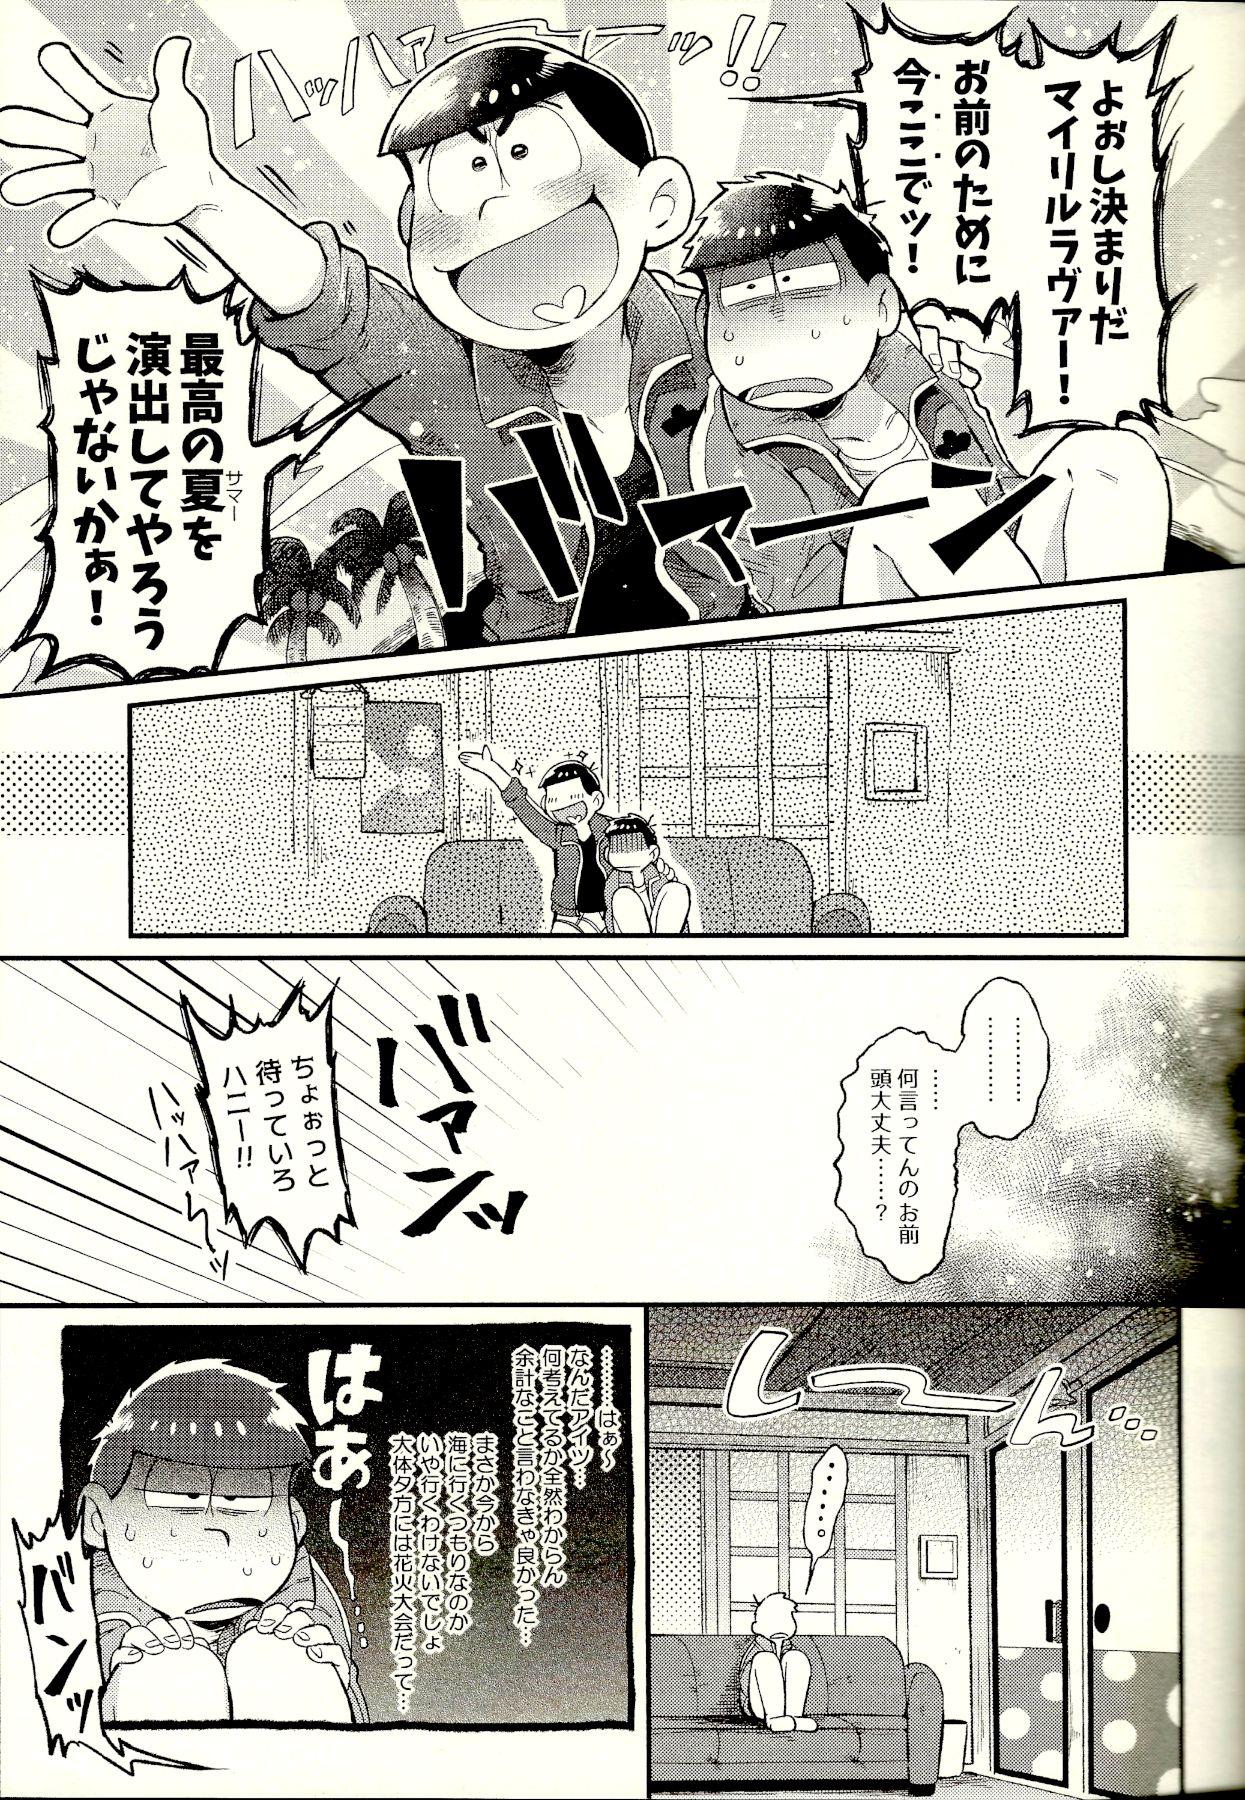 Ex Gf Season in the Summer - Osomatsu san Hiddencam - Page 9